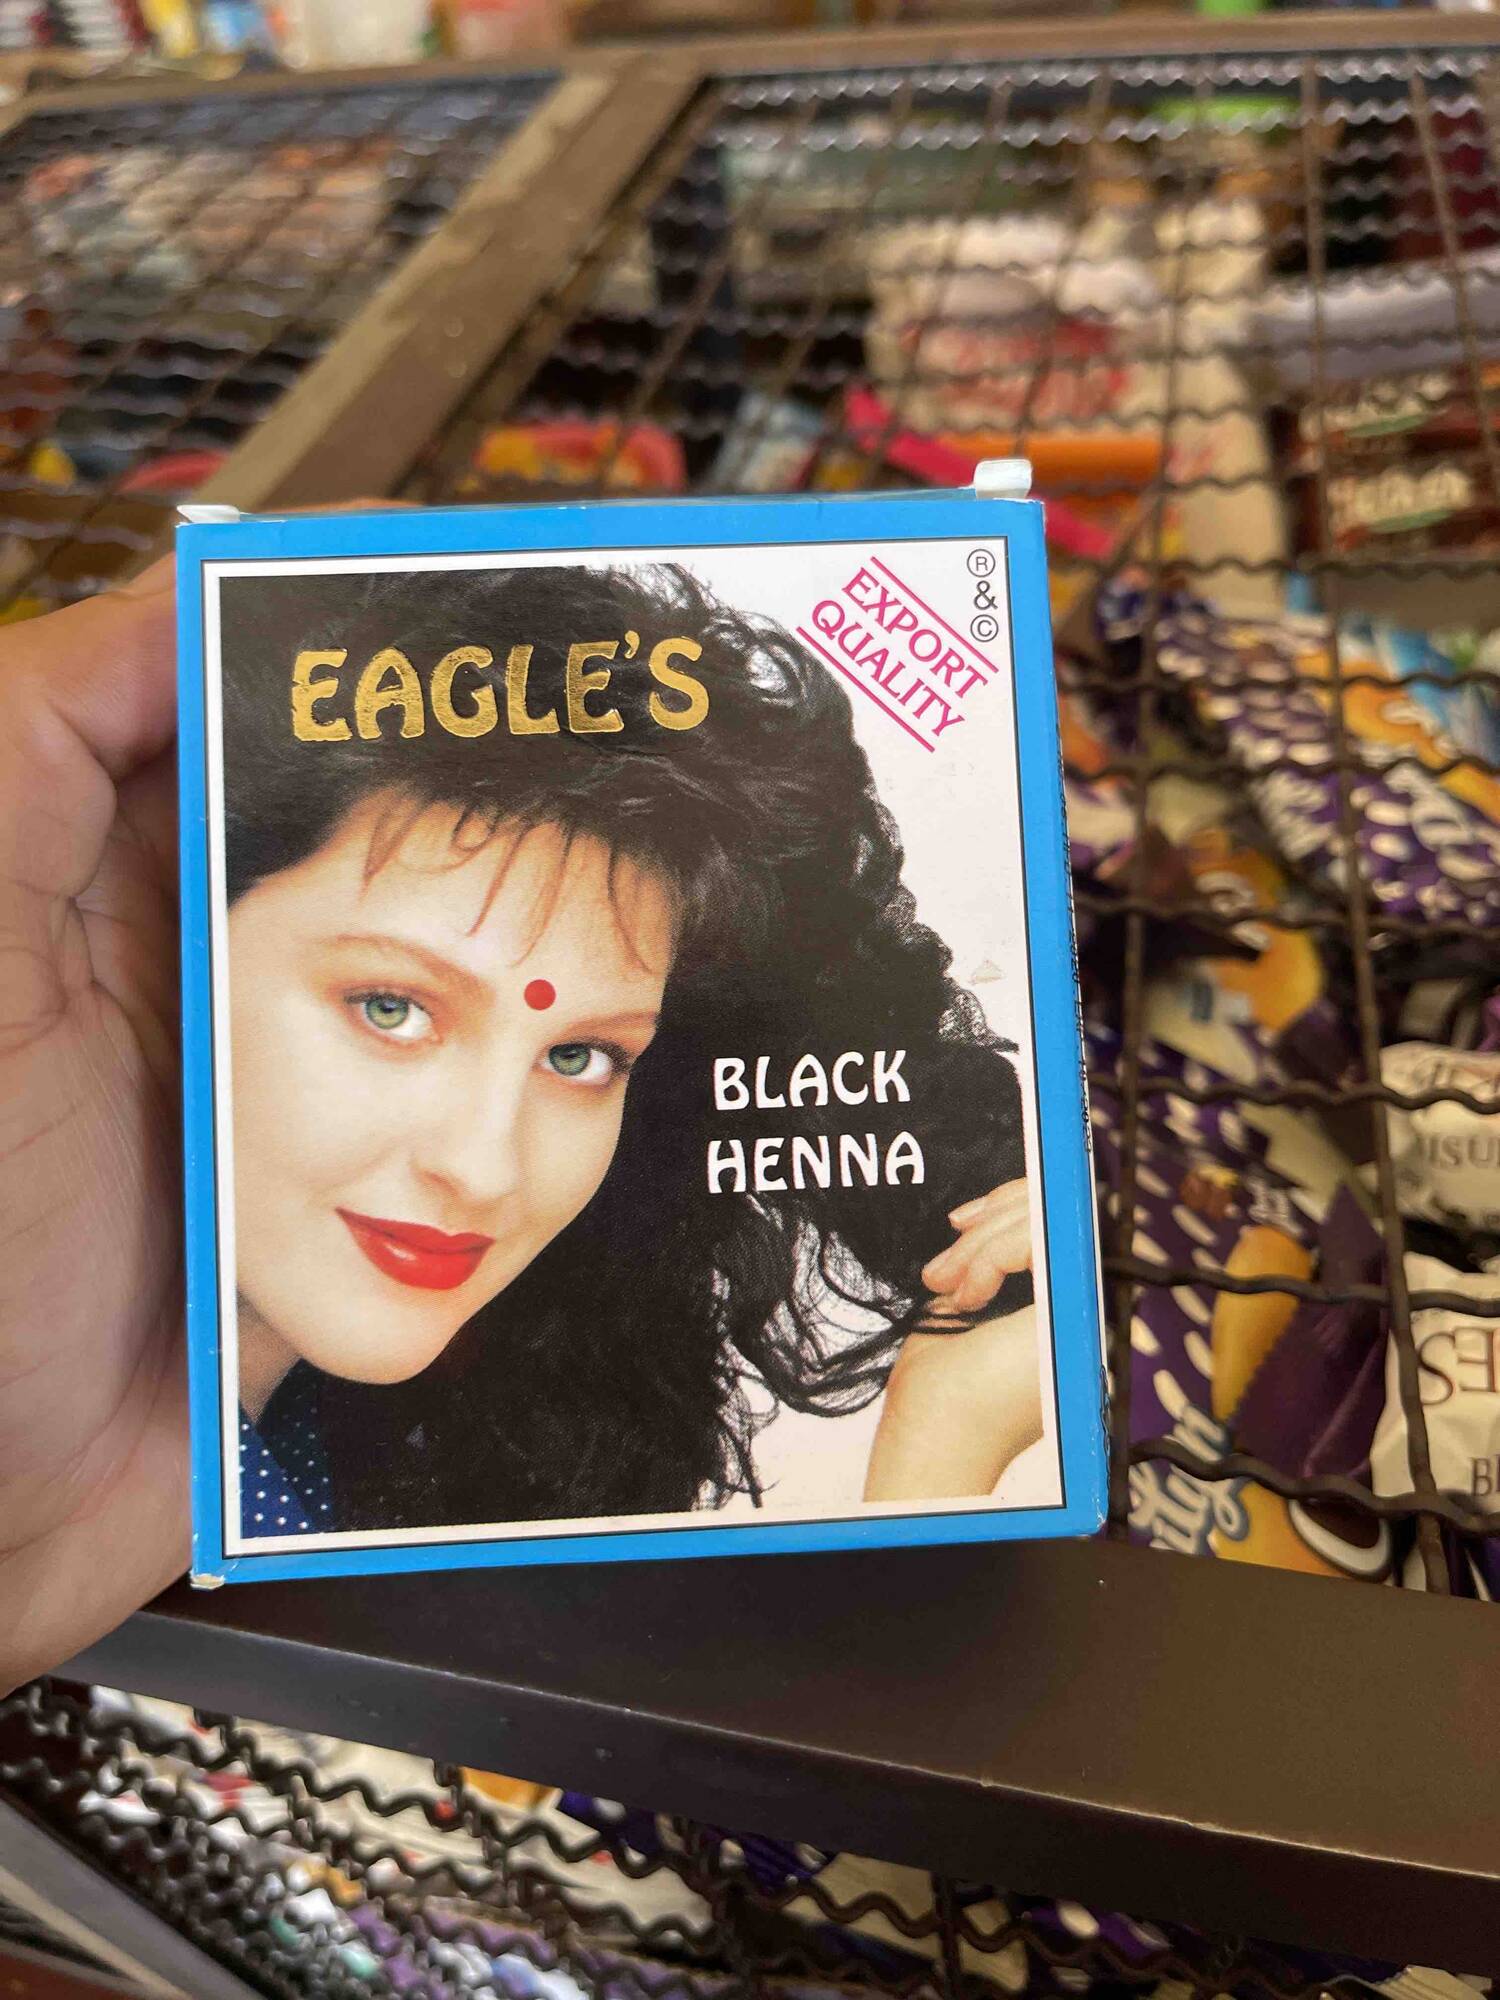 EAGLE'S - Black henna